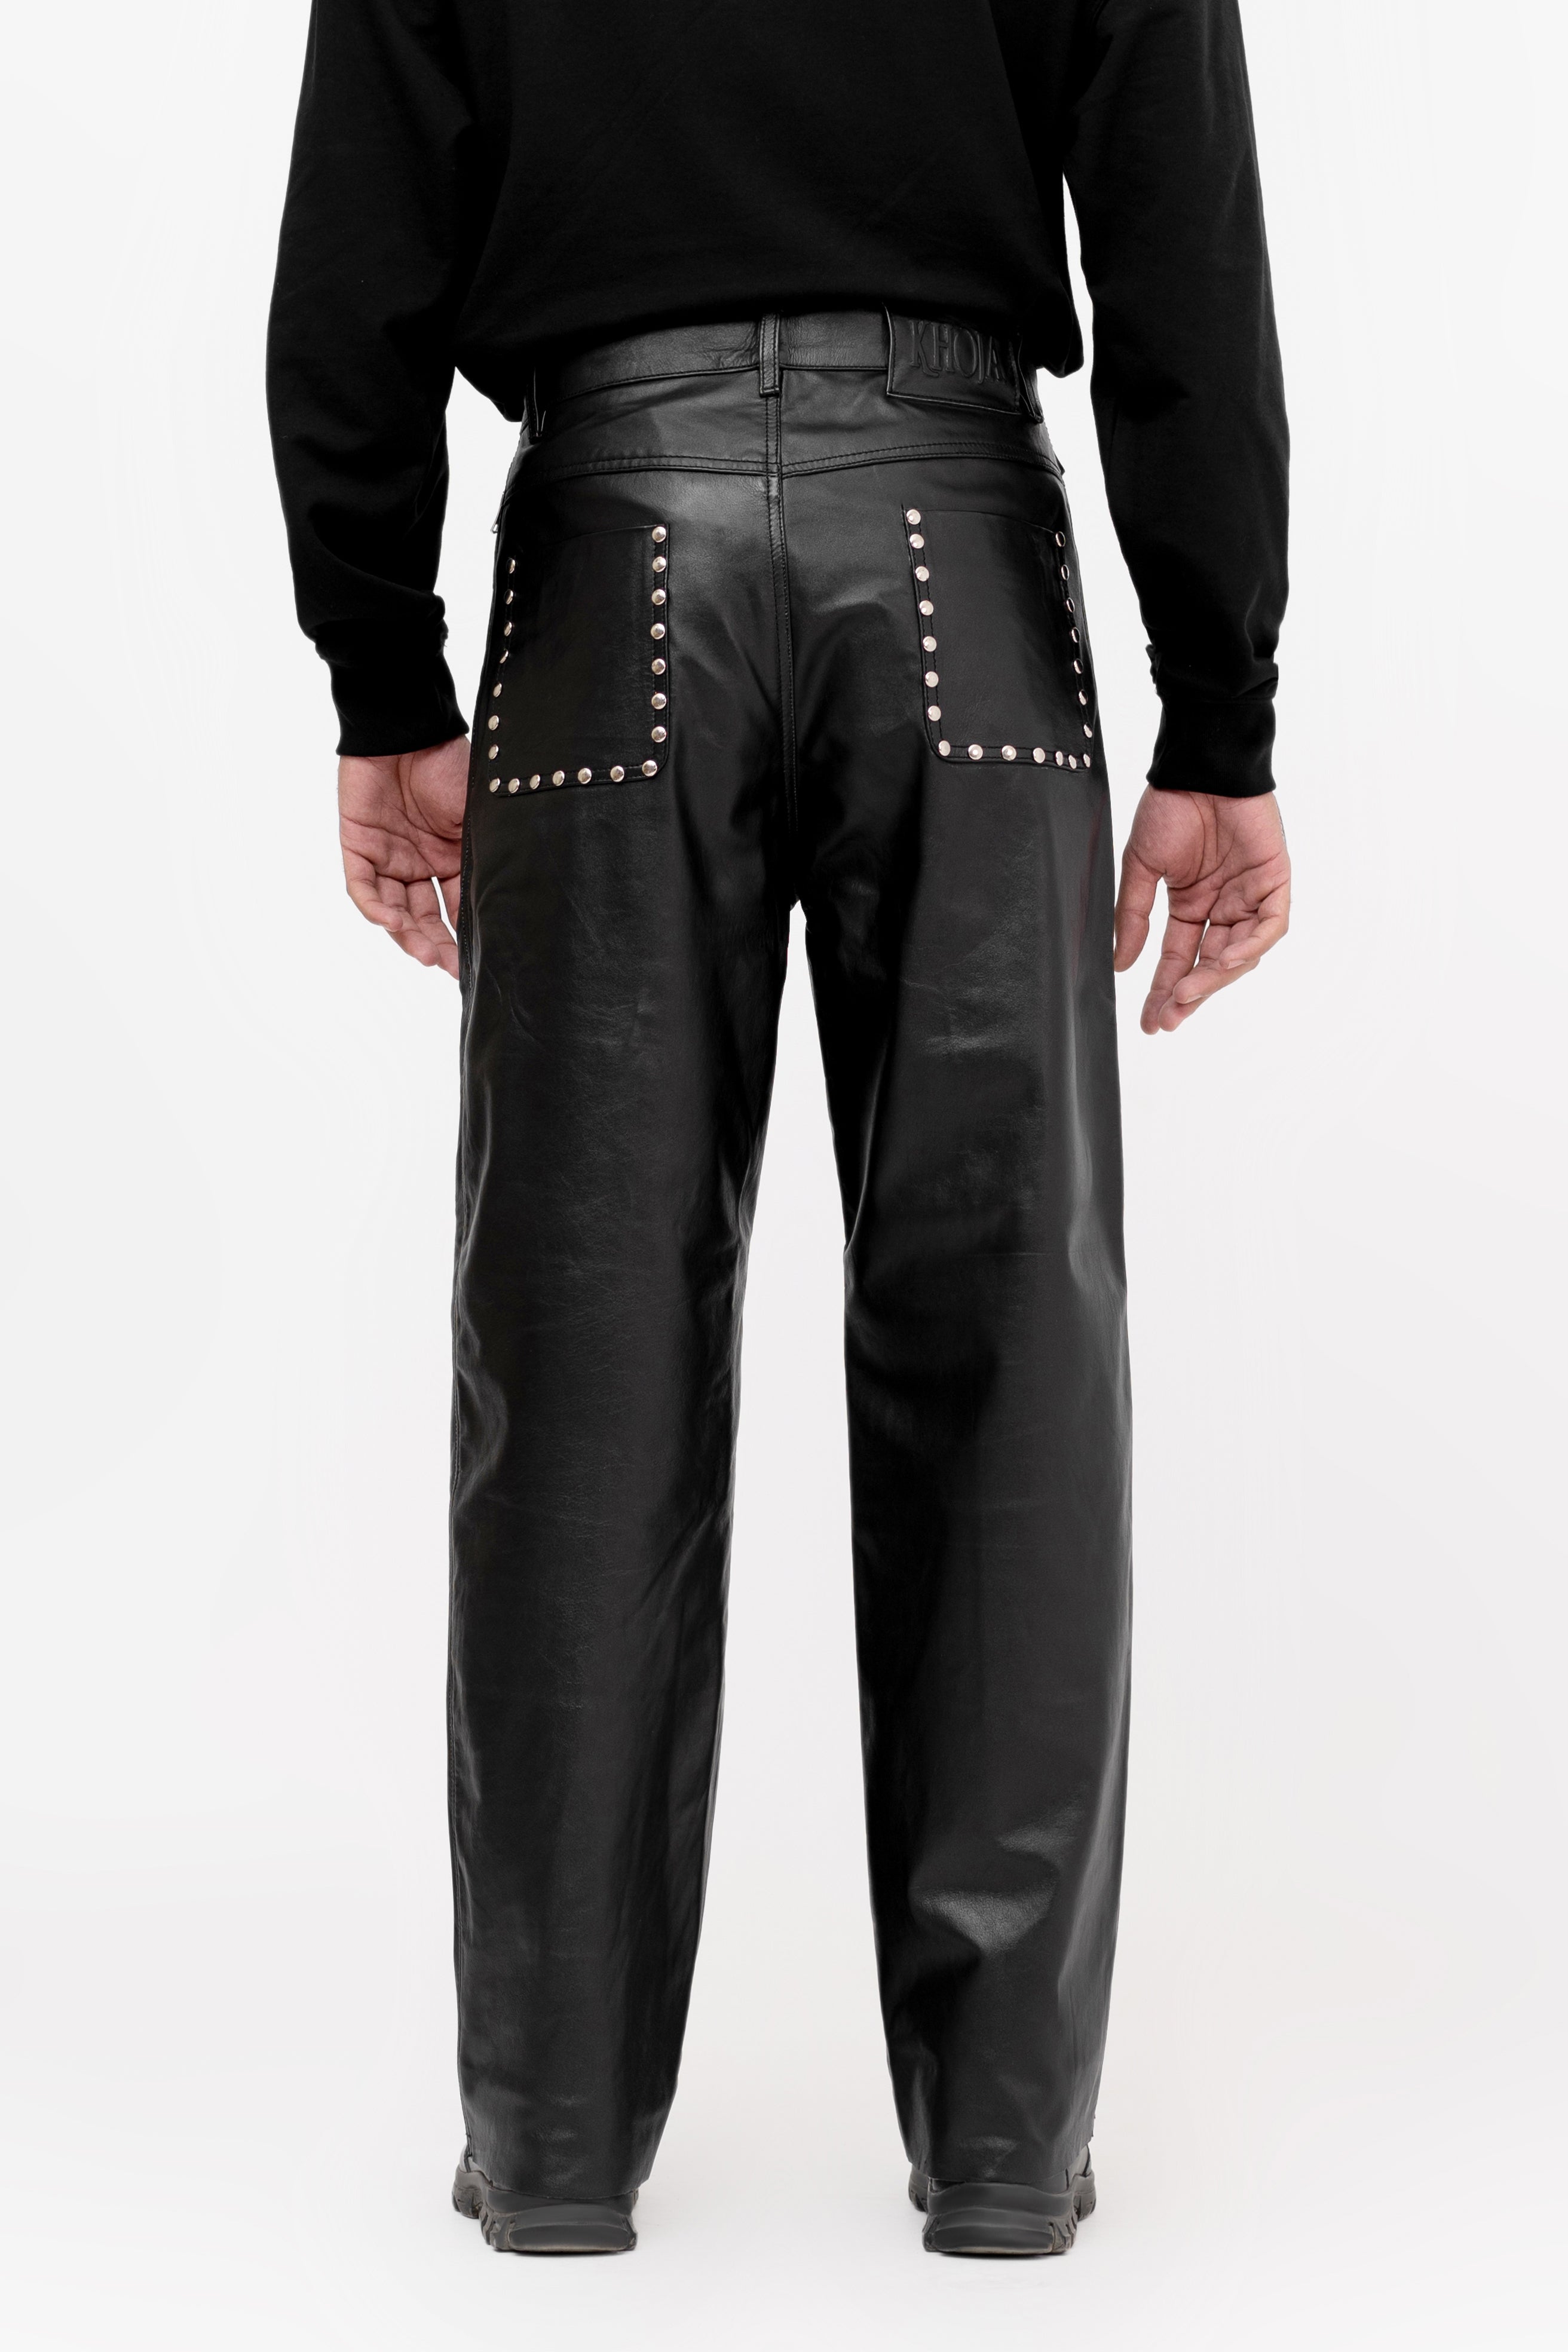 "Equinox Wrangler" Leather Pants